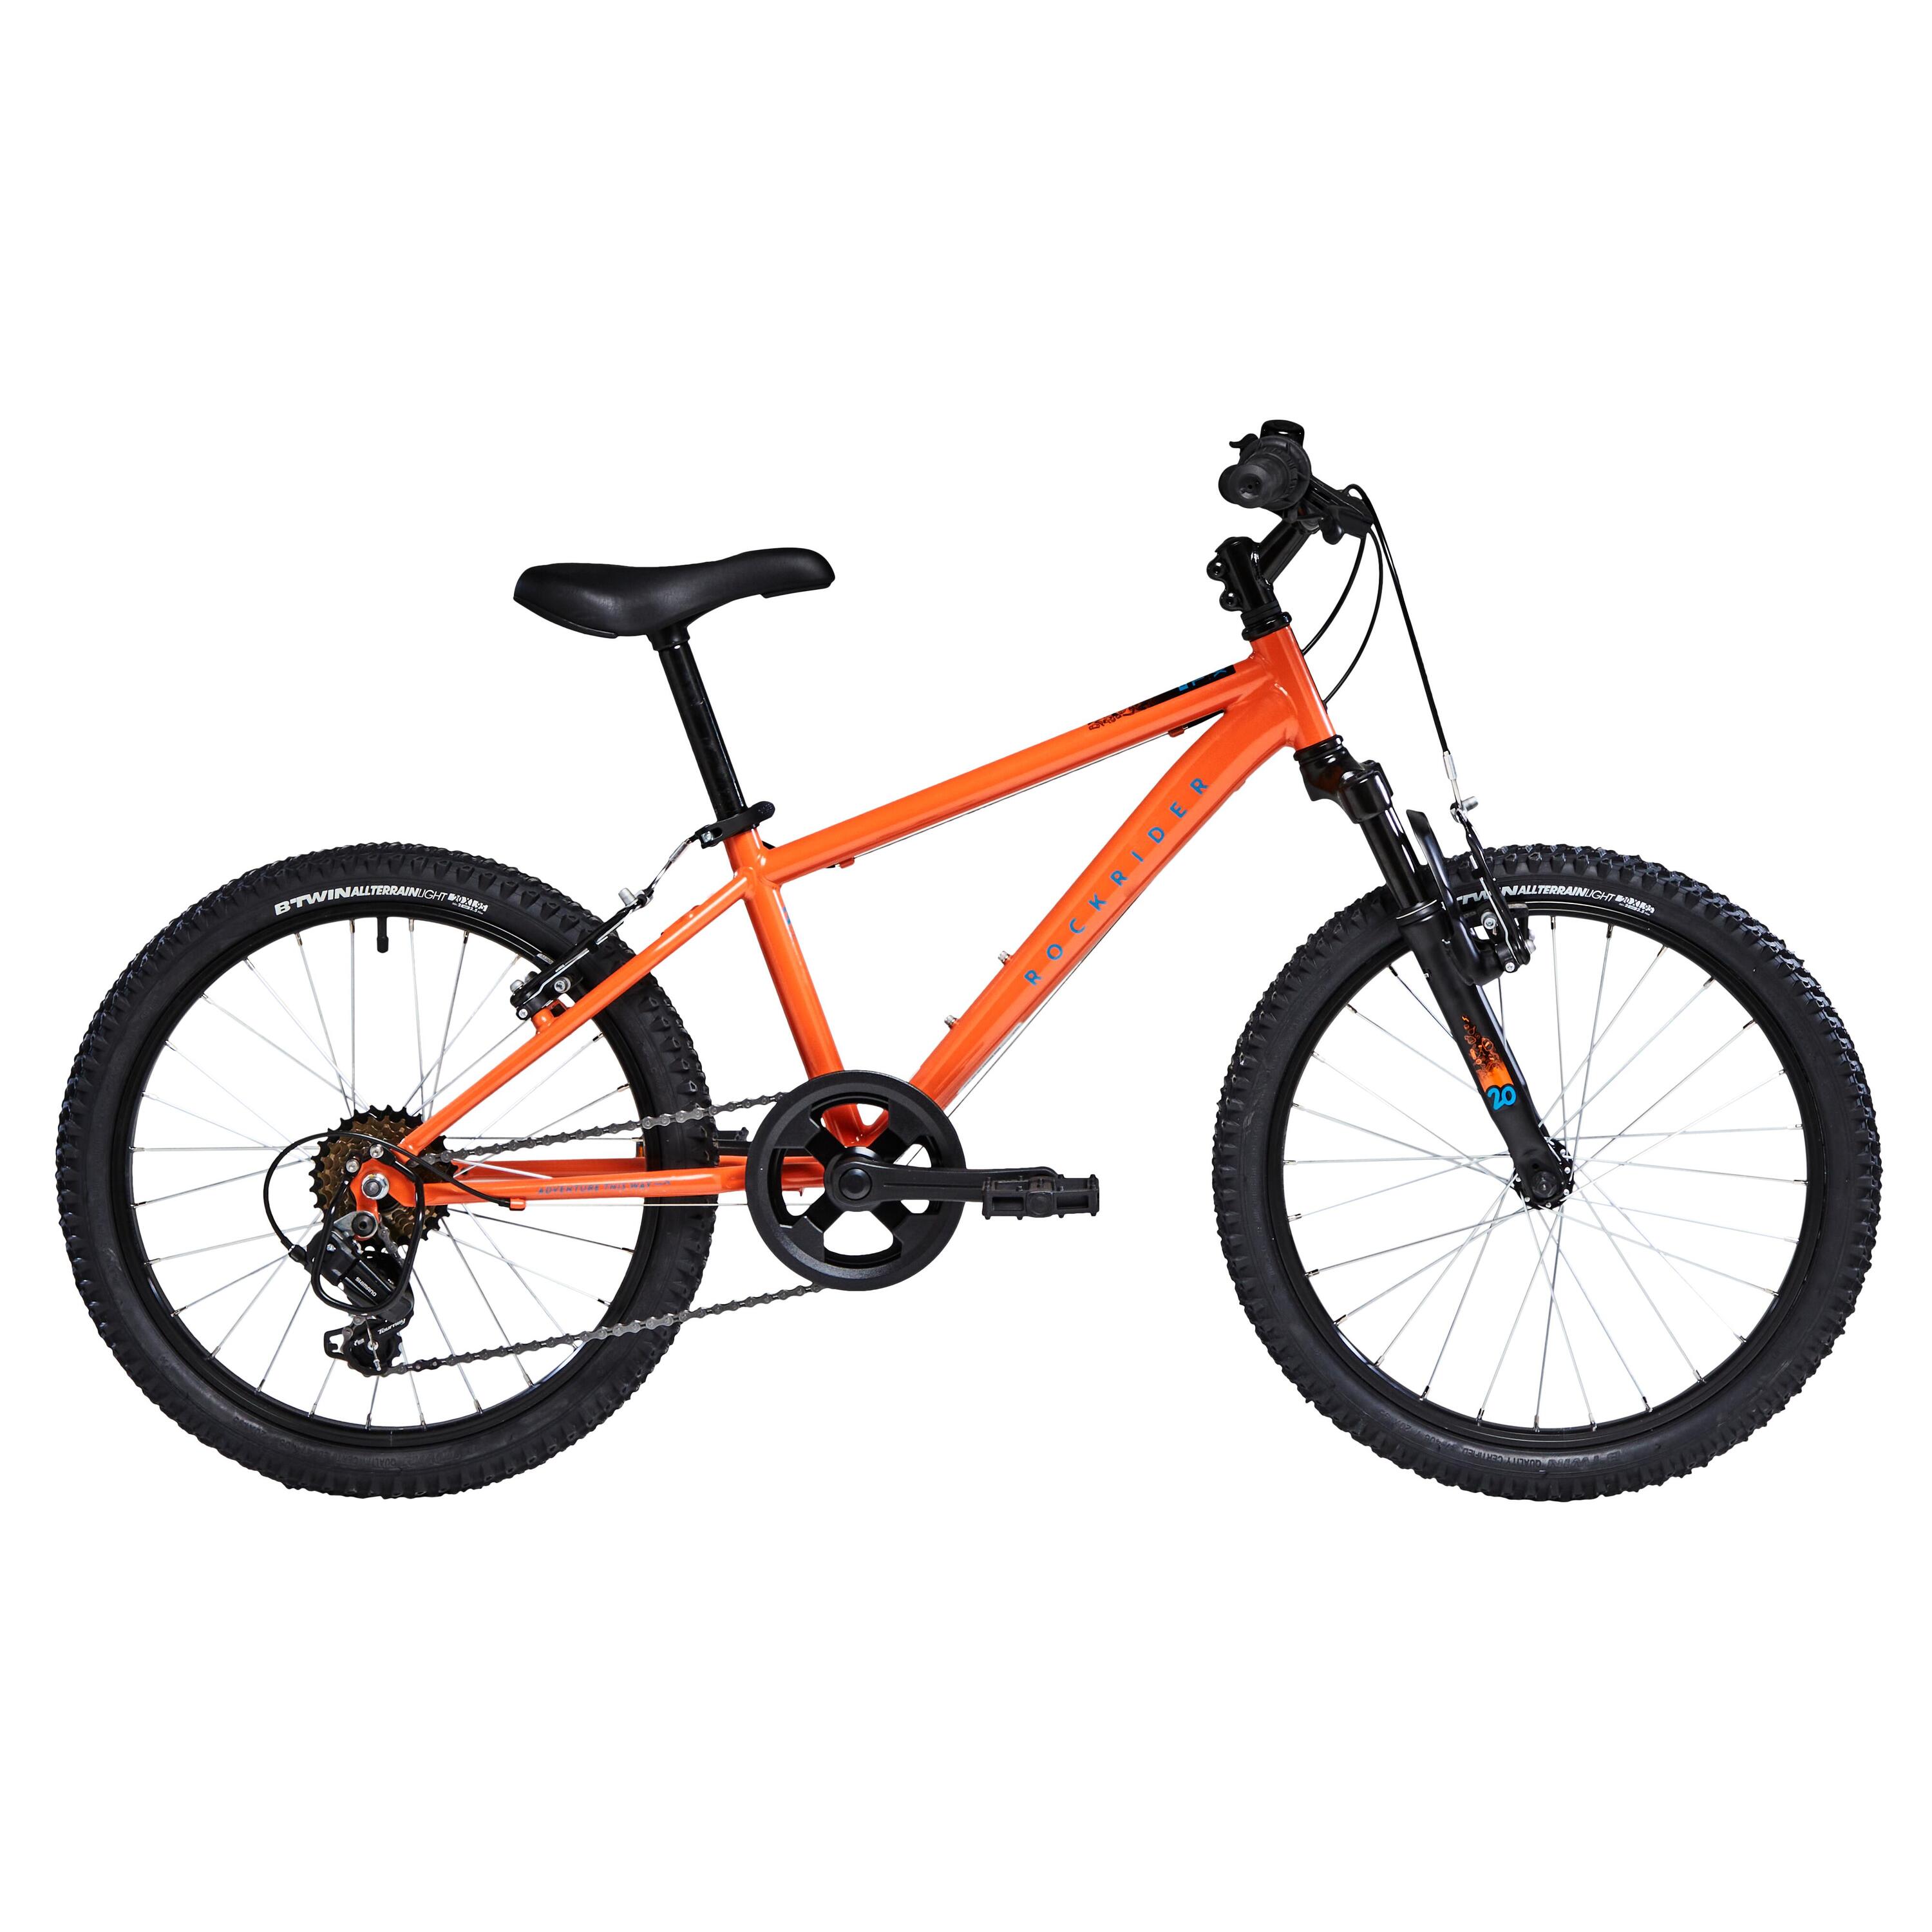 BTWIN Kids' 20-Inch Mountain Bike Explore 500 Ages 6-9 - Orange